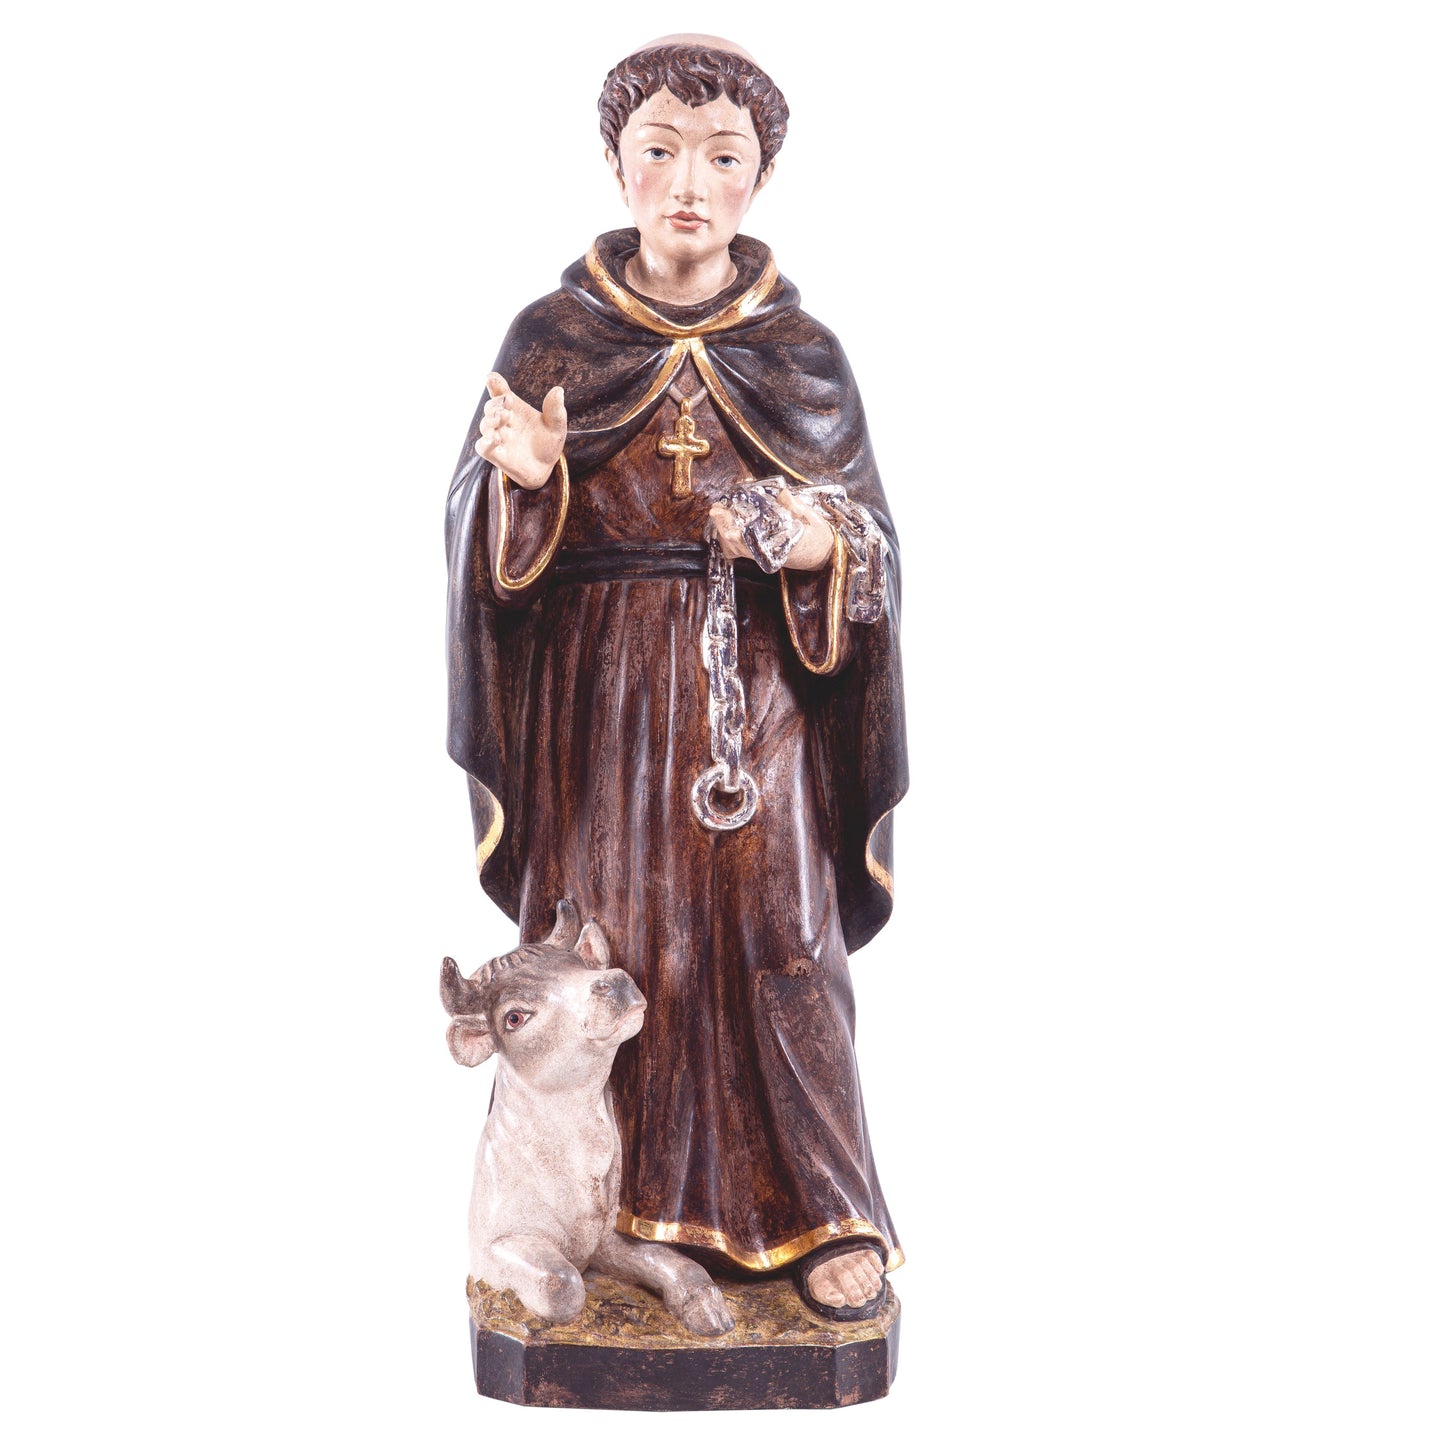 MONDO CATTOLICO Golden / 40 cm (15.7 in) Wooden Statue of St. Leonard of Noblac